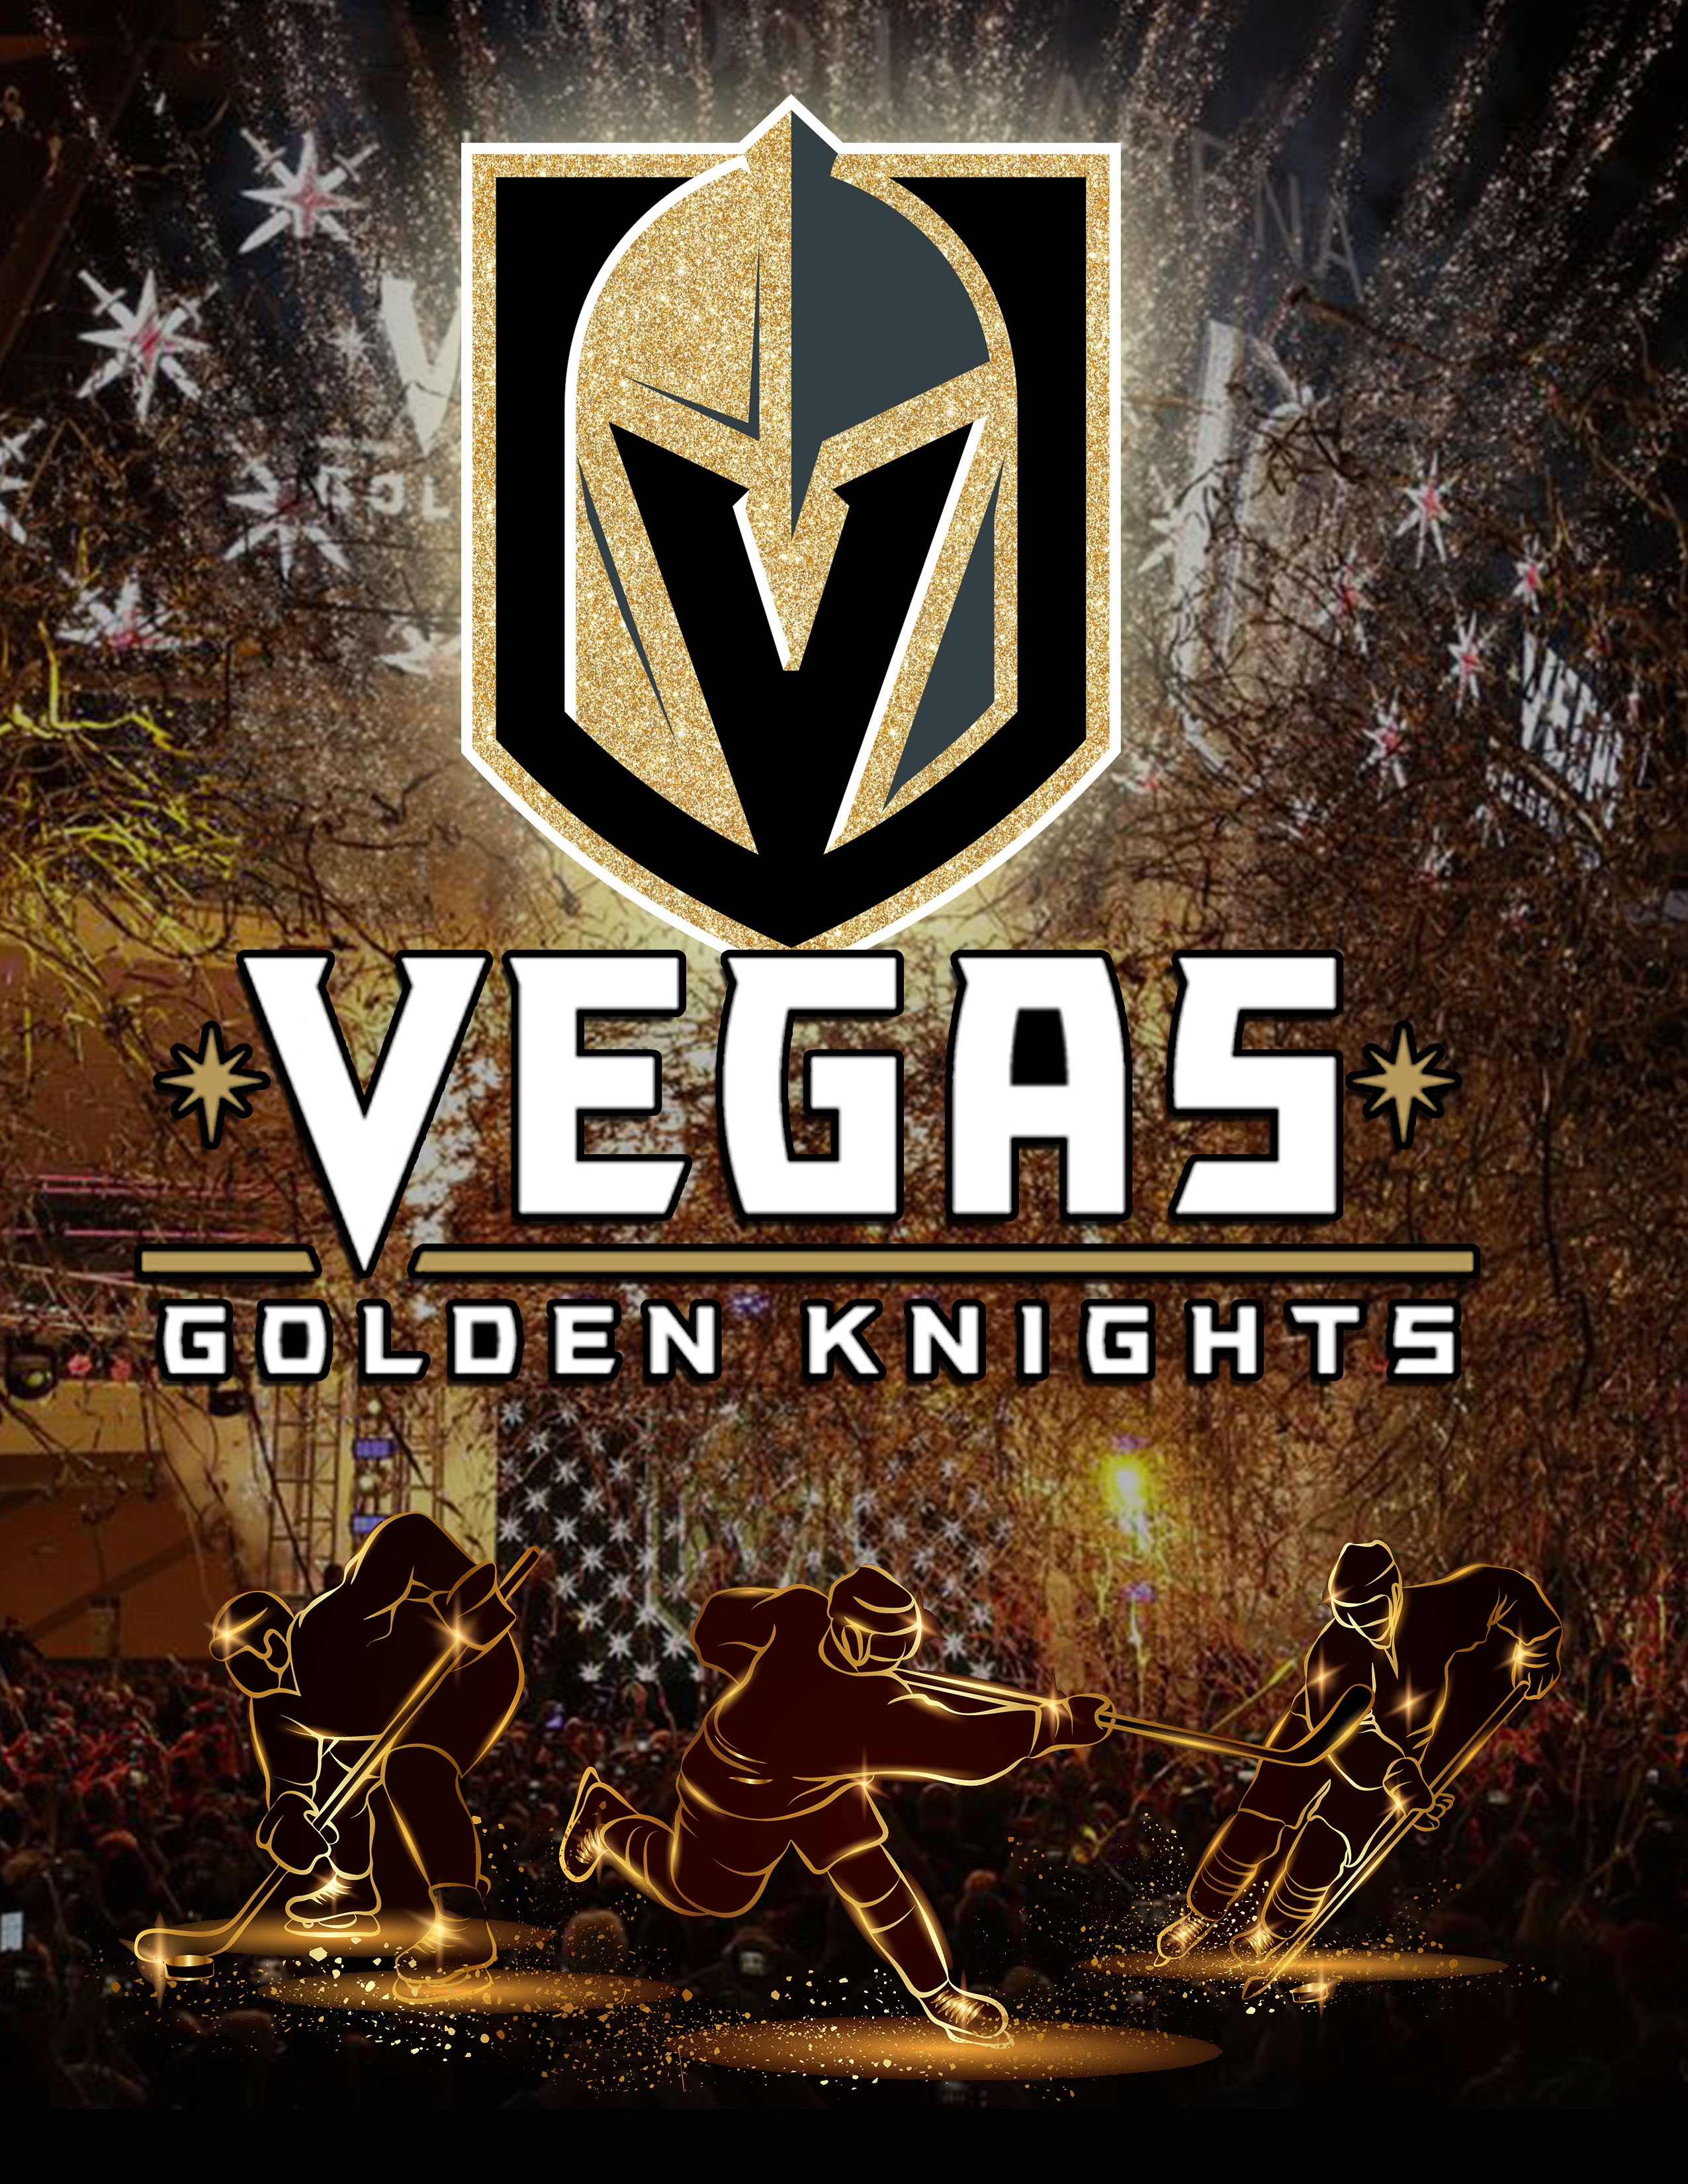 Vegas Golden Knights announce ticket sale dates